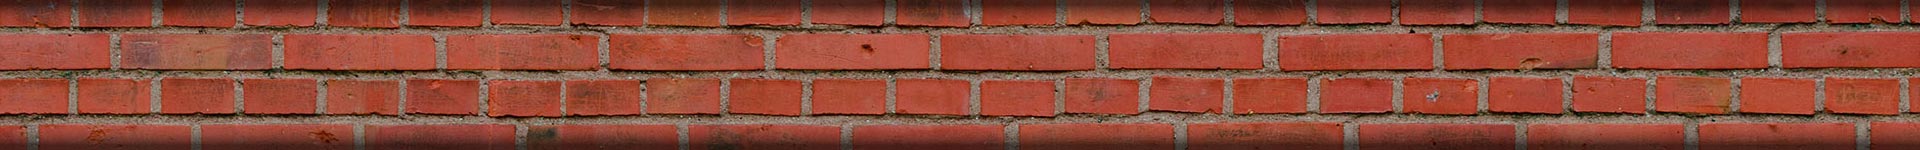 exposed brick pattern